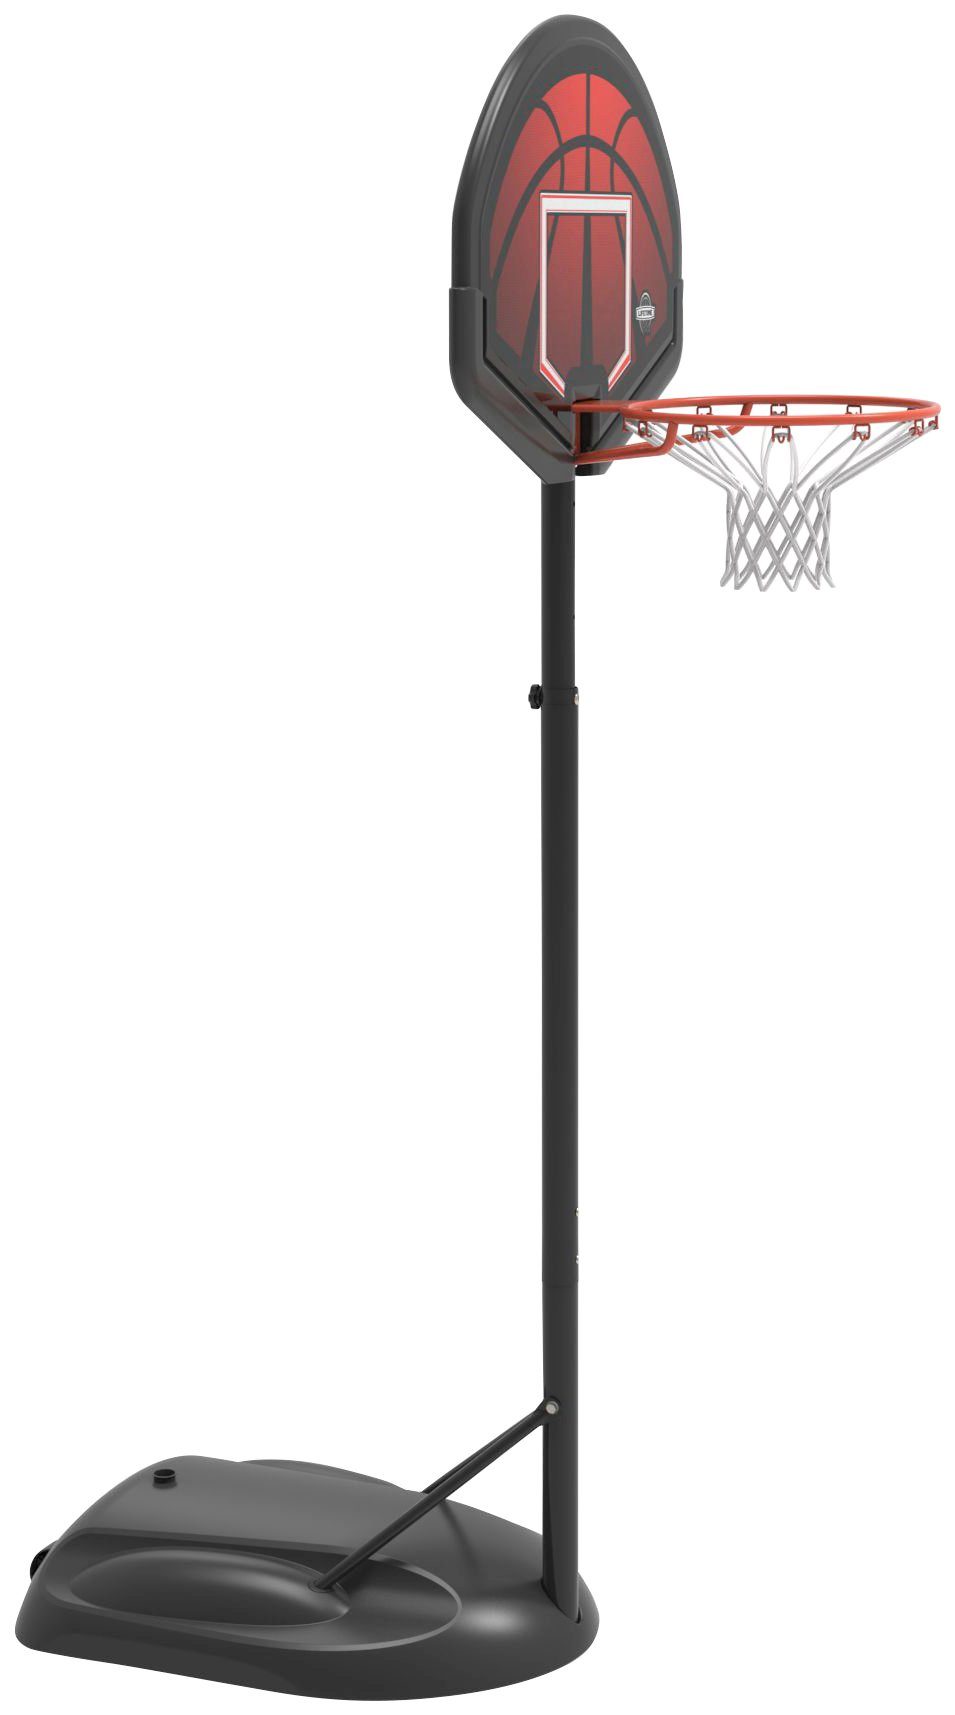 Basketballkorb Alabama, 50NRTH höhenverstellbar schwarz/rot